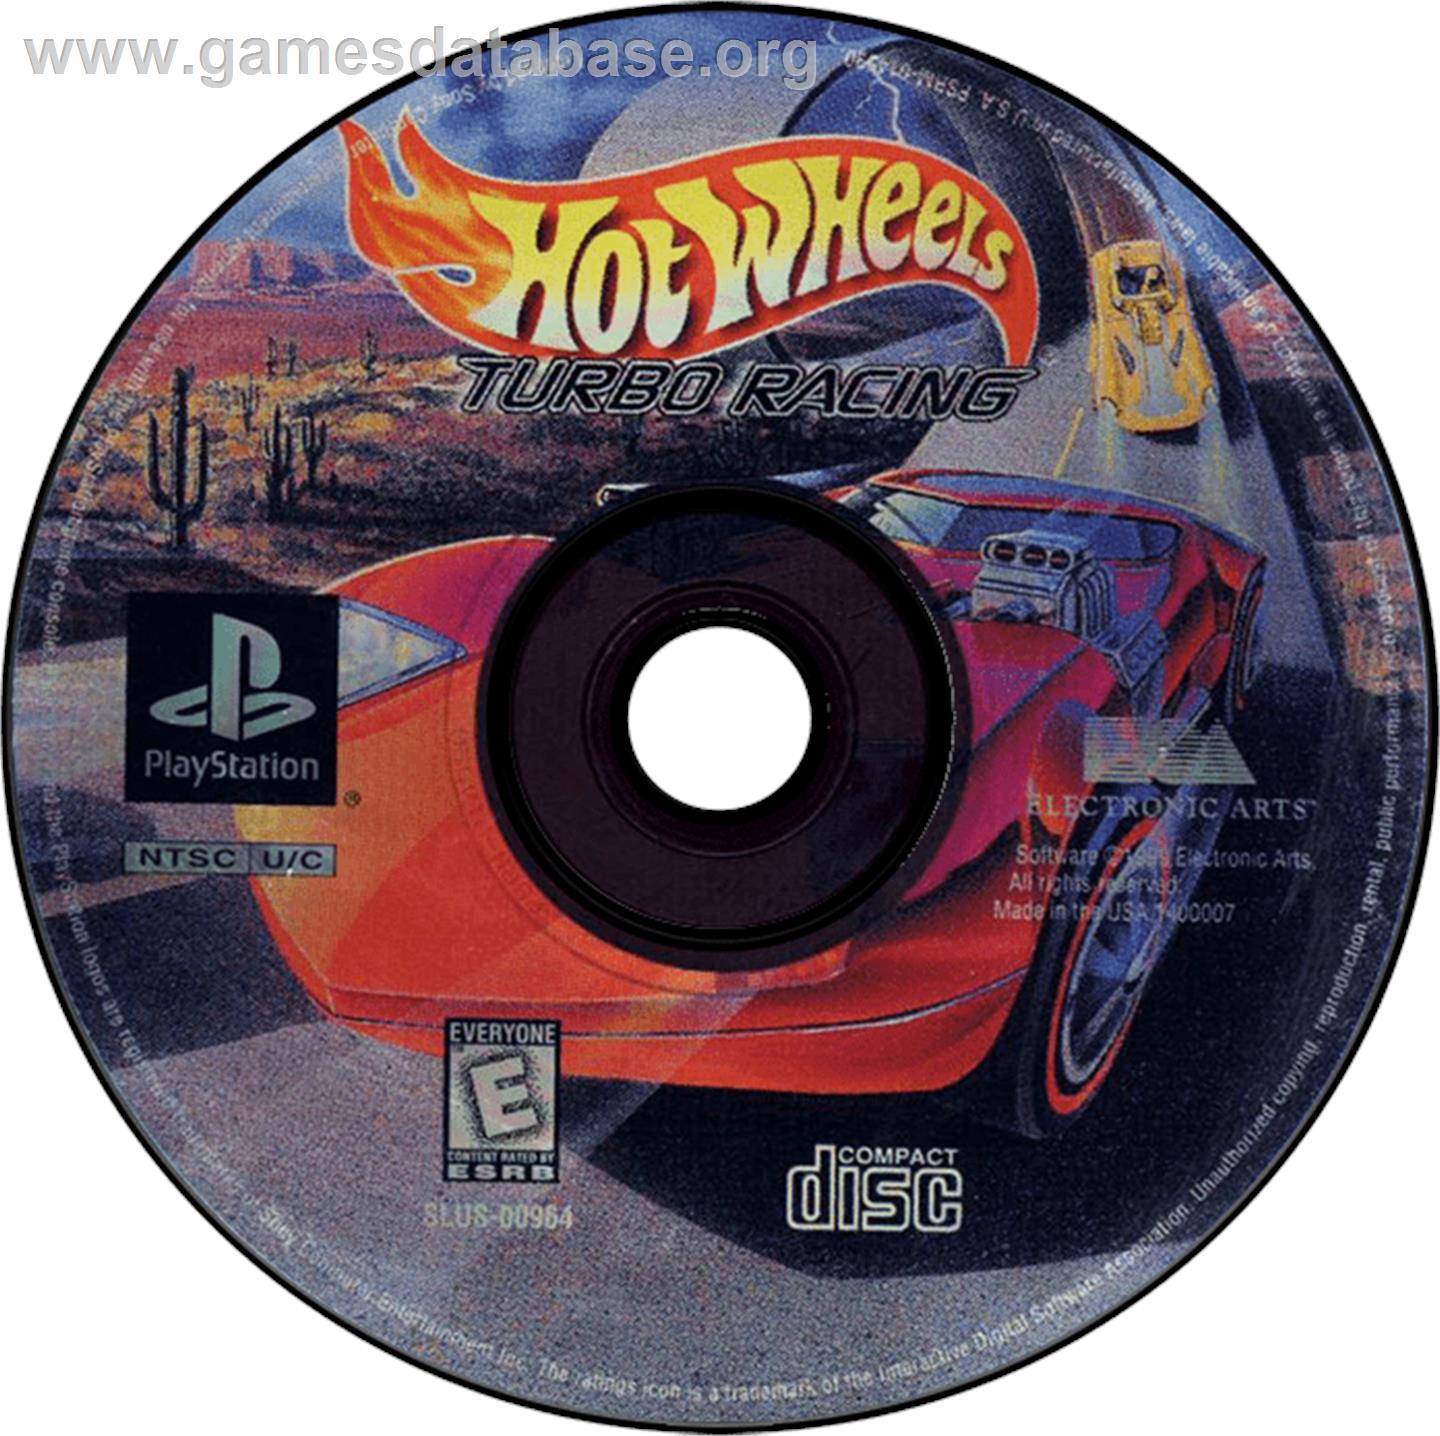 Hot Wheels: Turbo Racing - Sony Playstation - Artwork - Disc